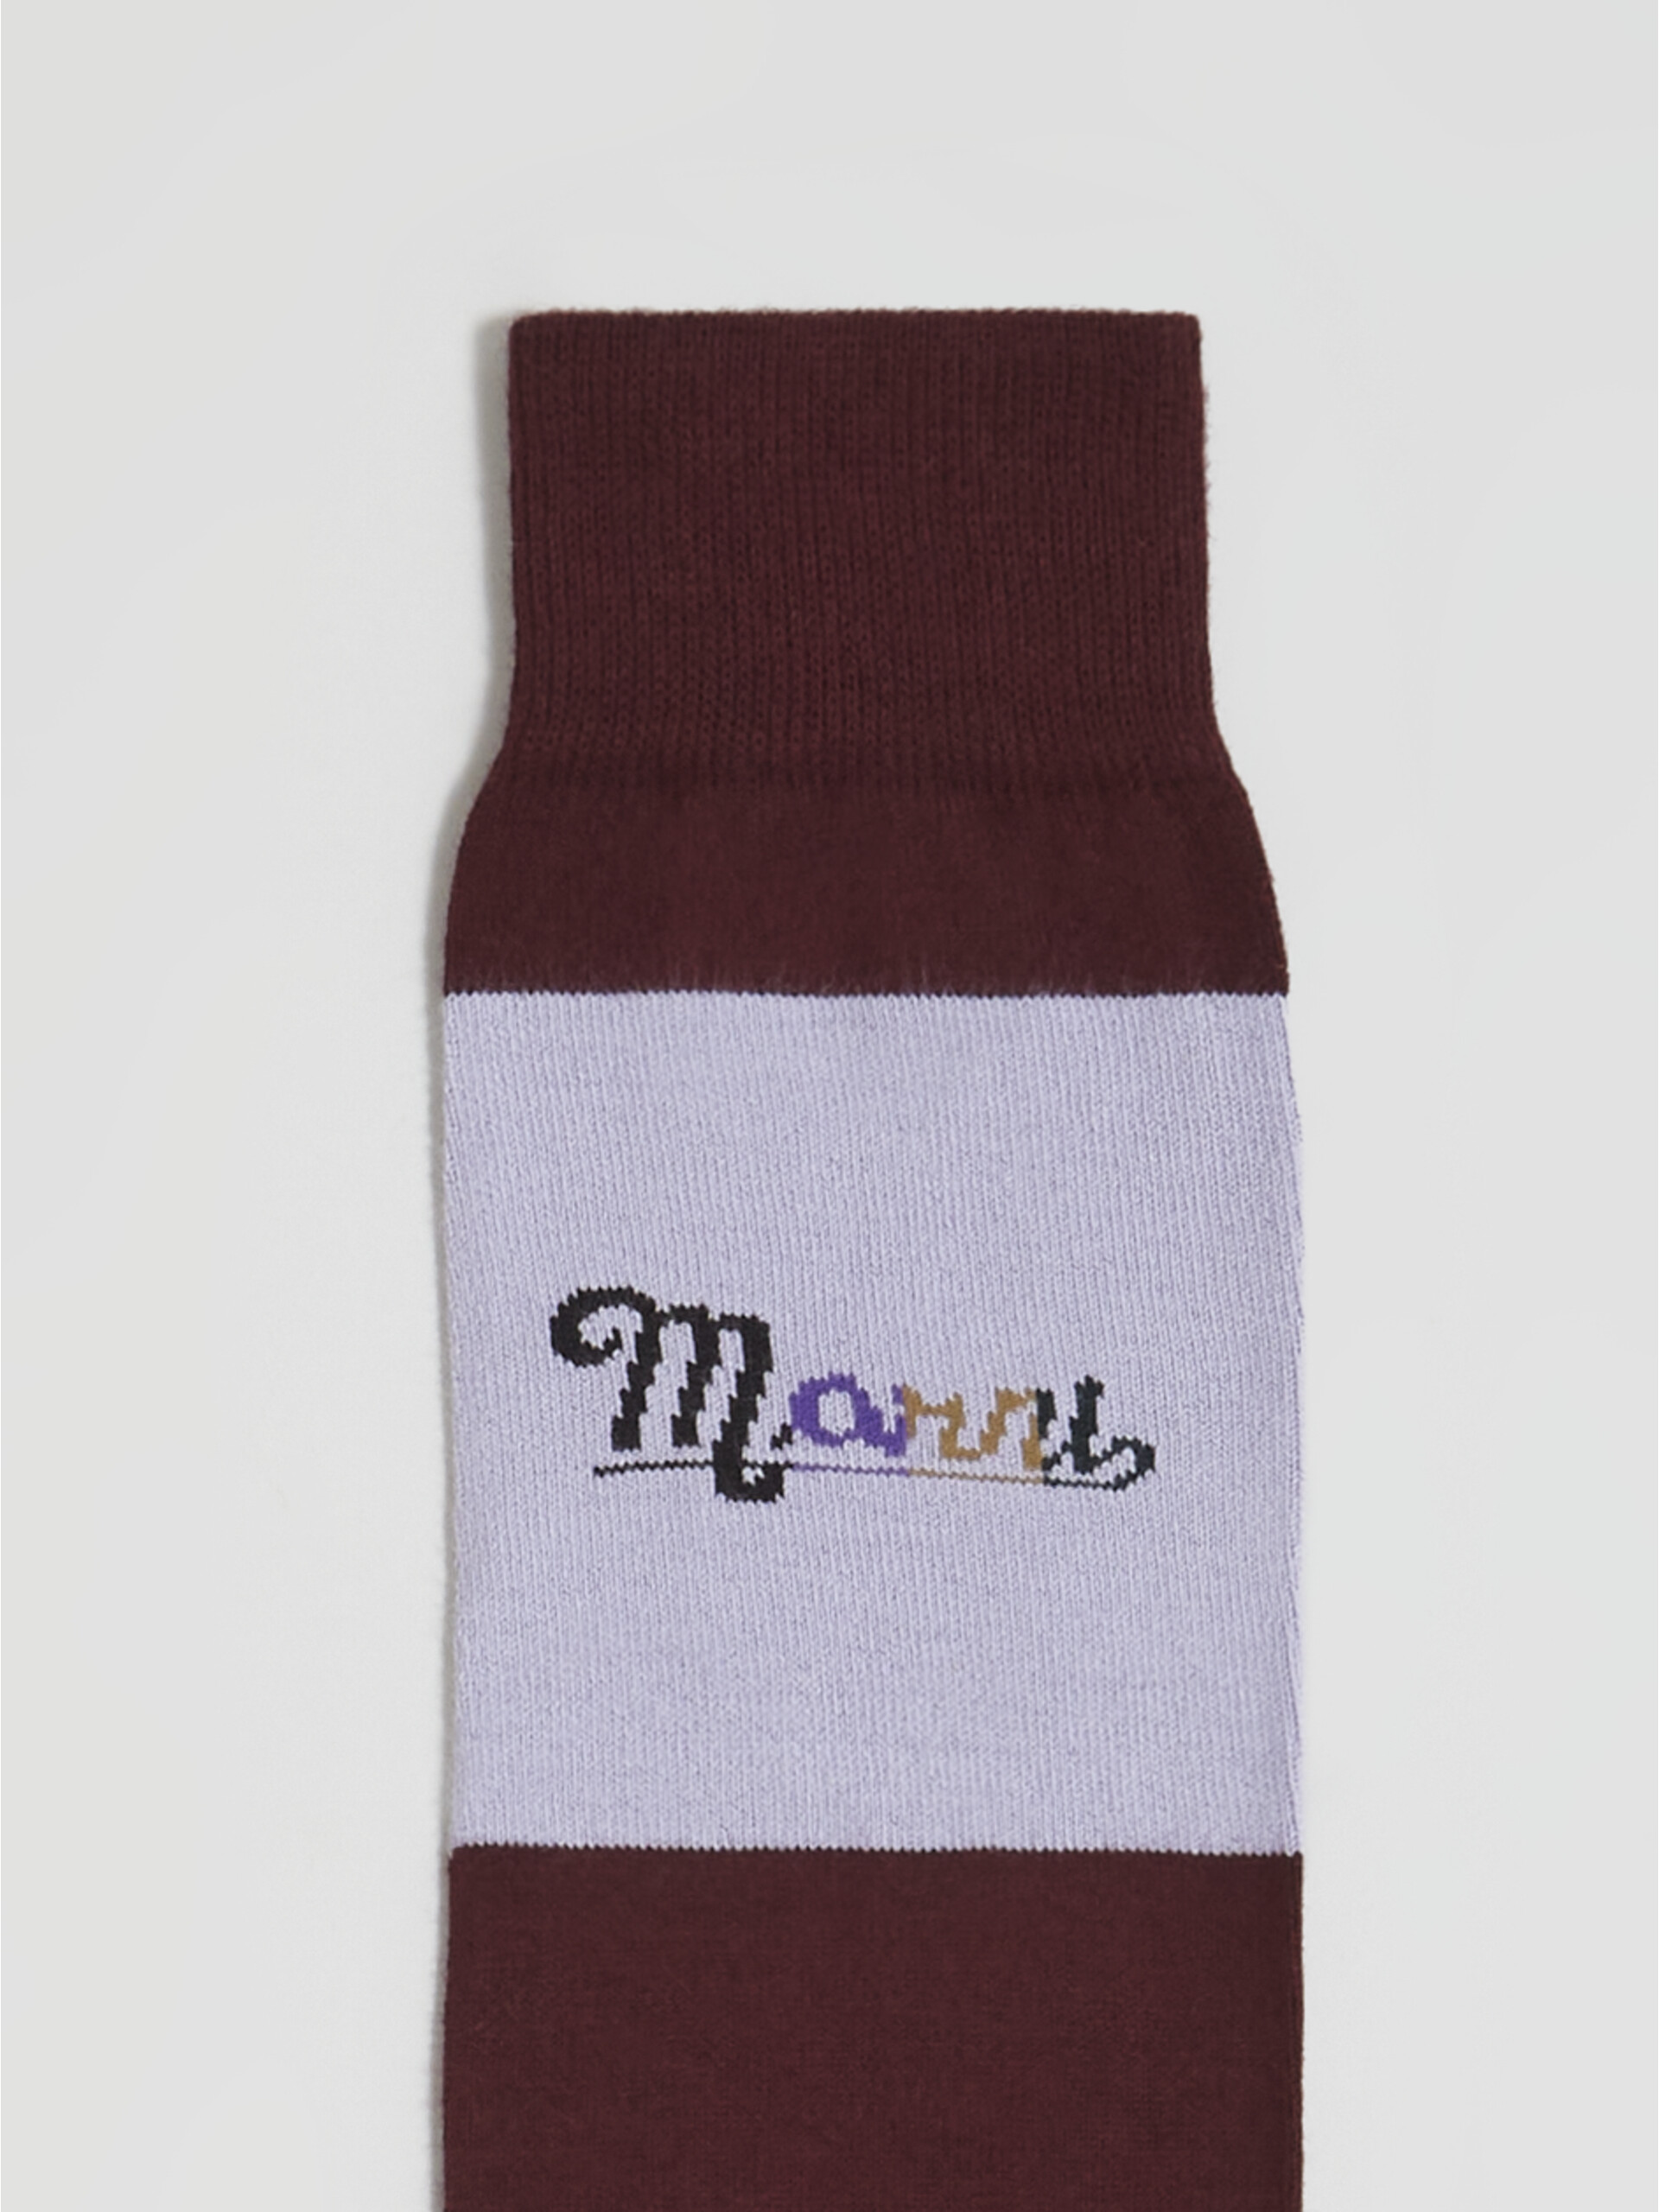 Socke aus burgunderrot-violett gestreiftem Nylon mit Regenbogen-Logo-Intarsie - Socken - Image 3